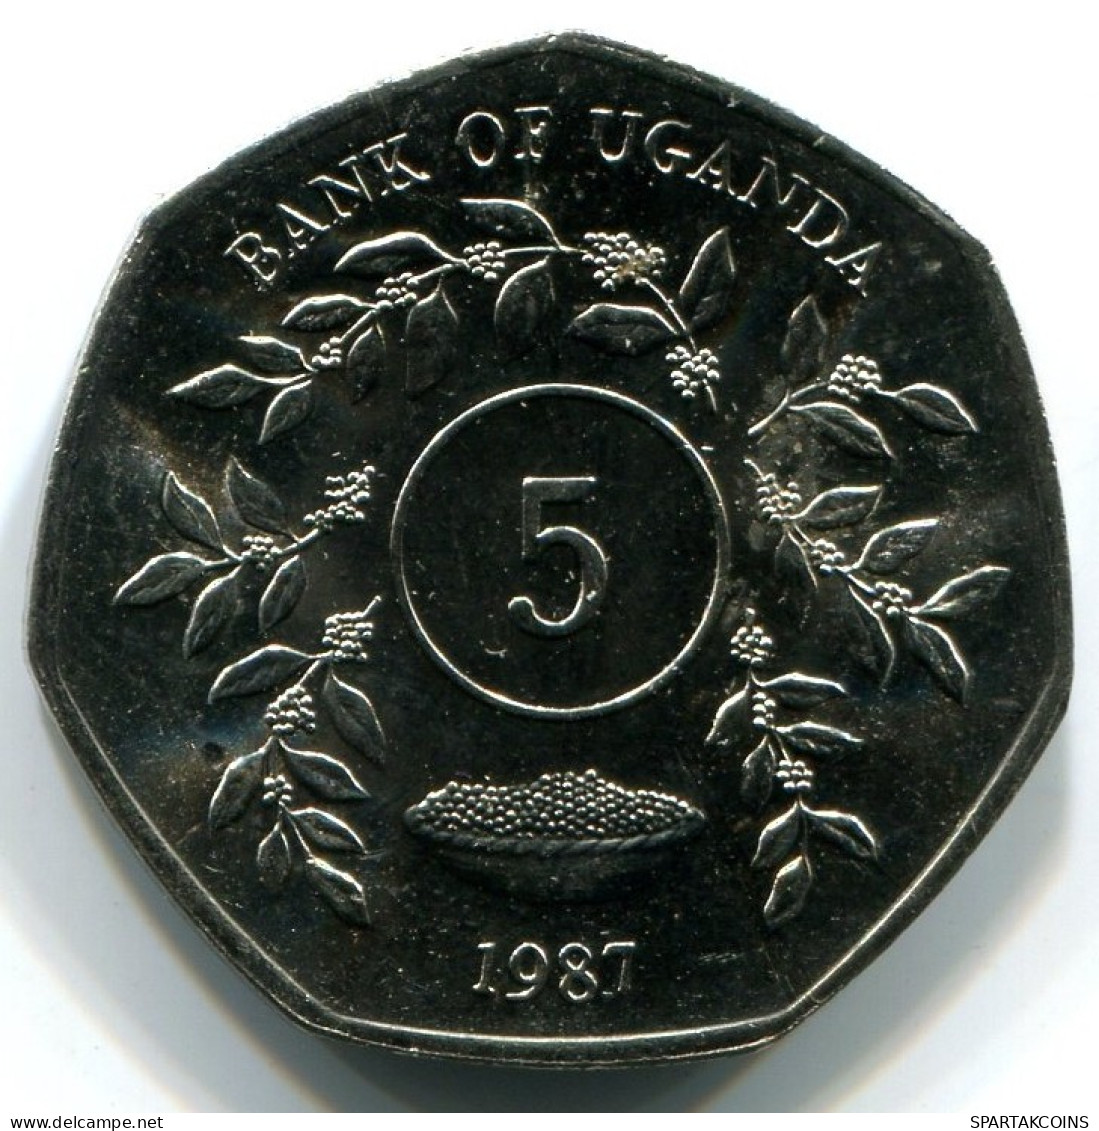 5 SHILLINGS 1987 UGANDA UNC Coin #W11143.U.A - Uganda